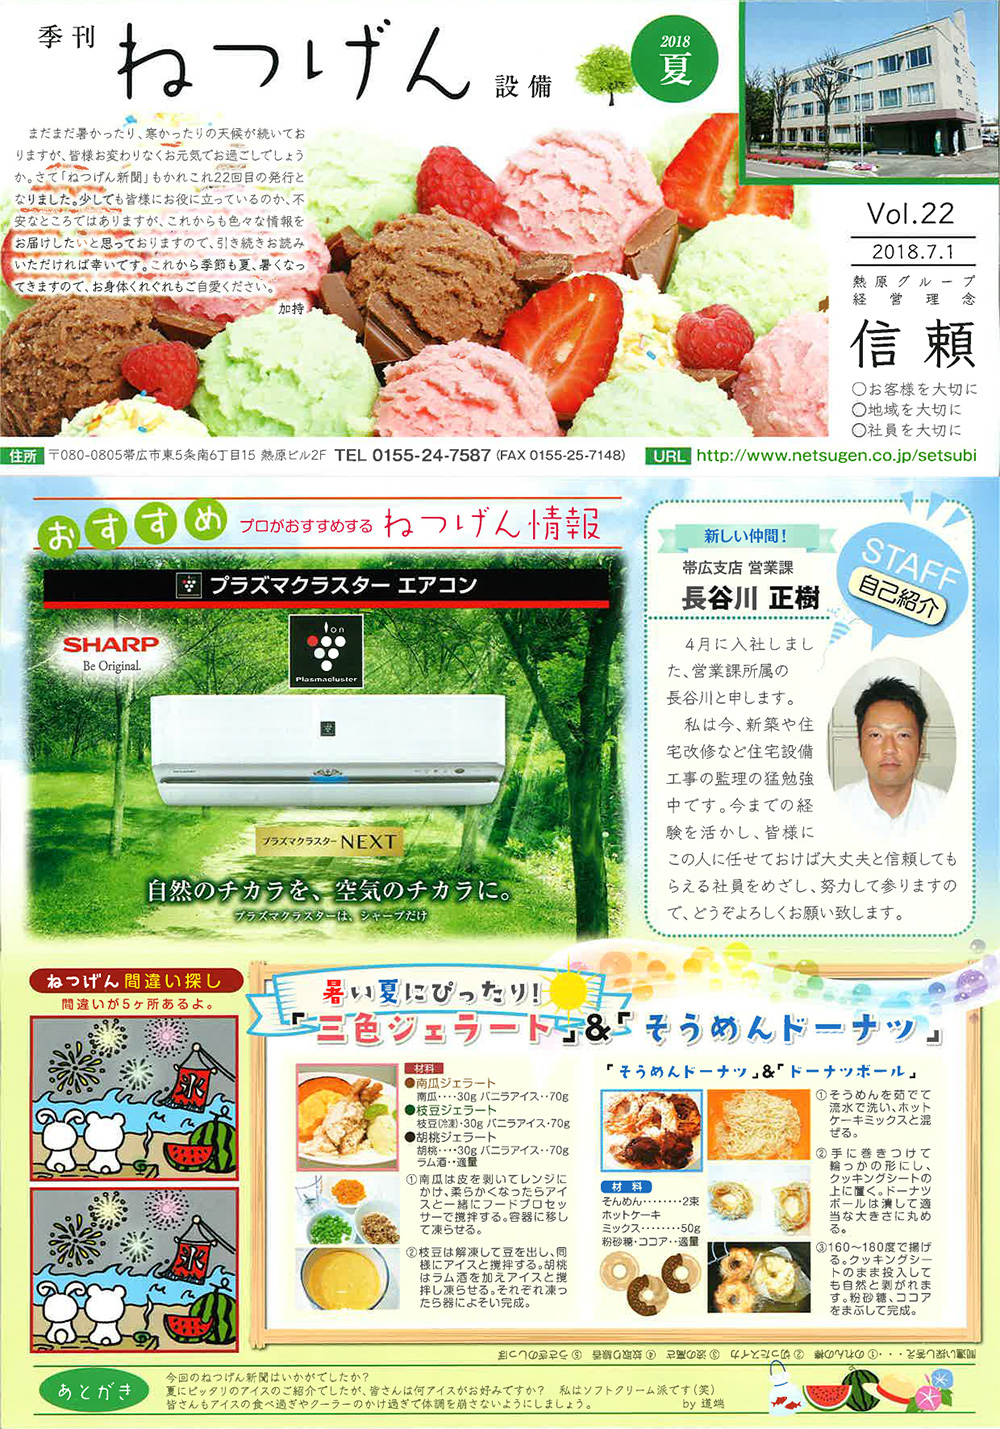 http://www.netsugen.co.jp/setsubi/information/images/180701kikan.jpg